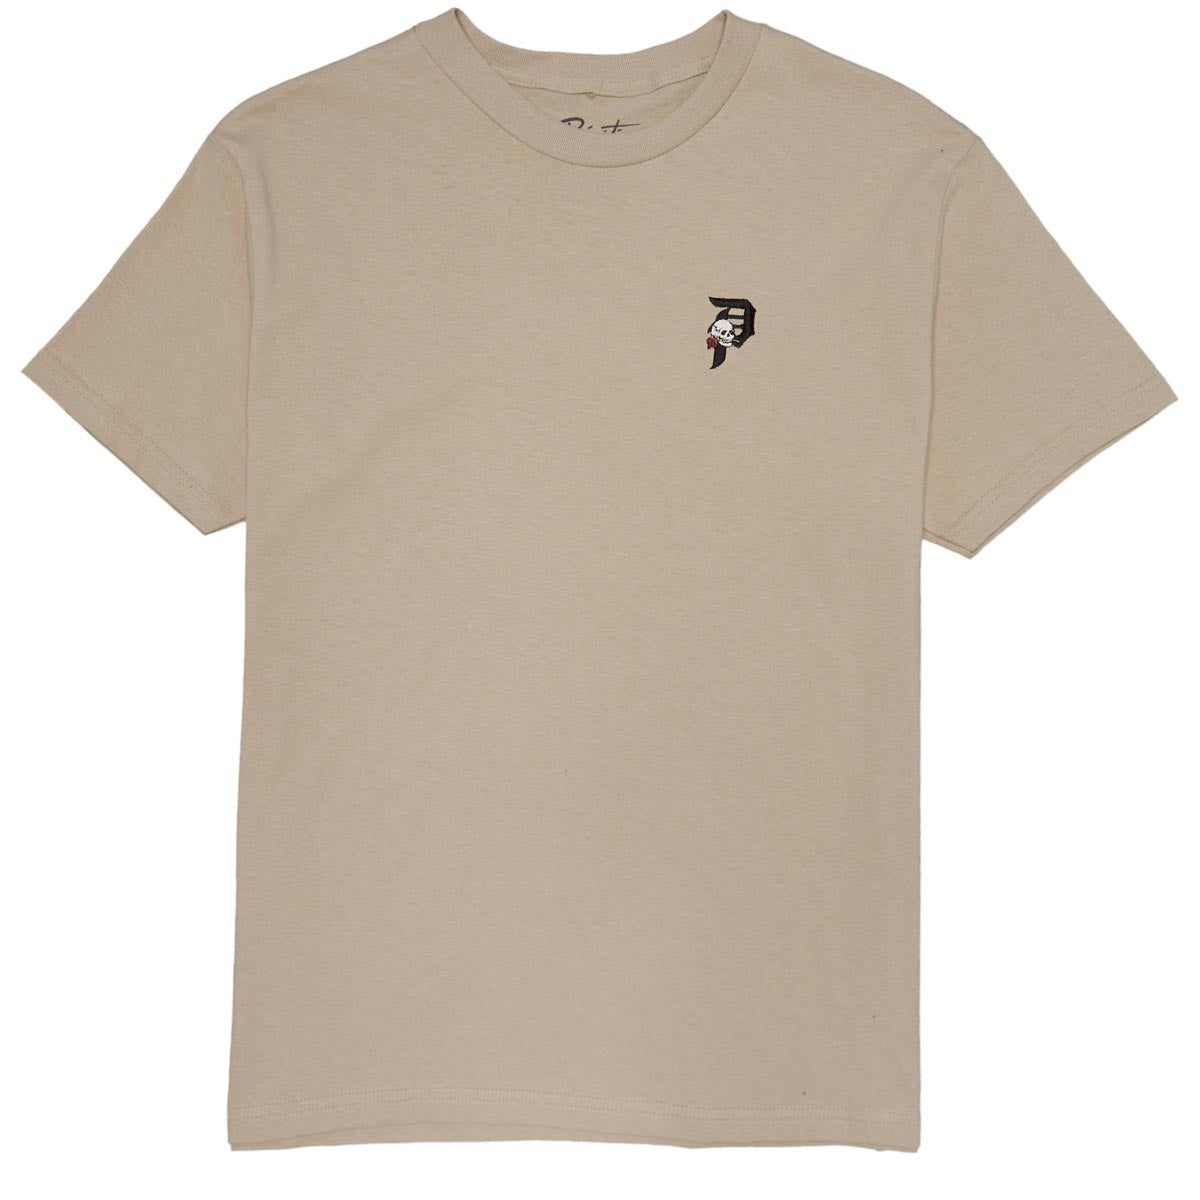 Primitive Dirty P Rogue T-Shirt - Sand image 1